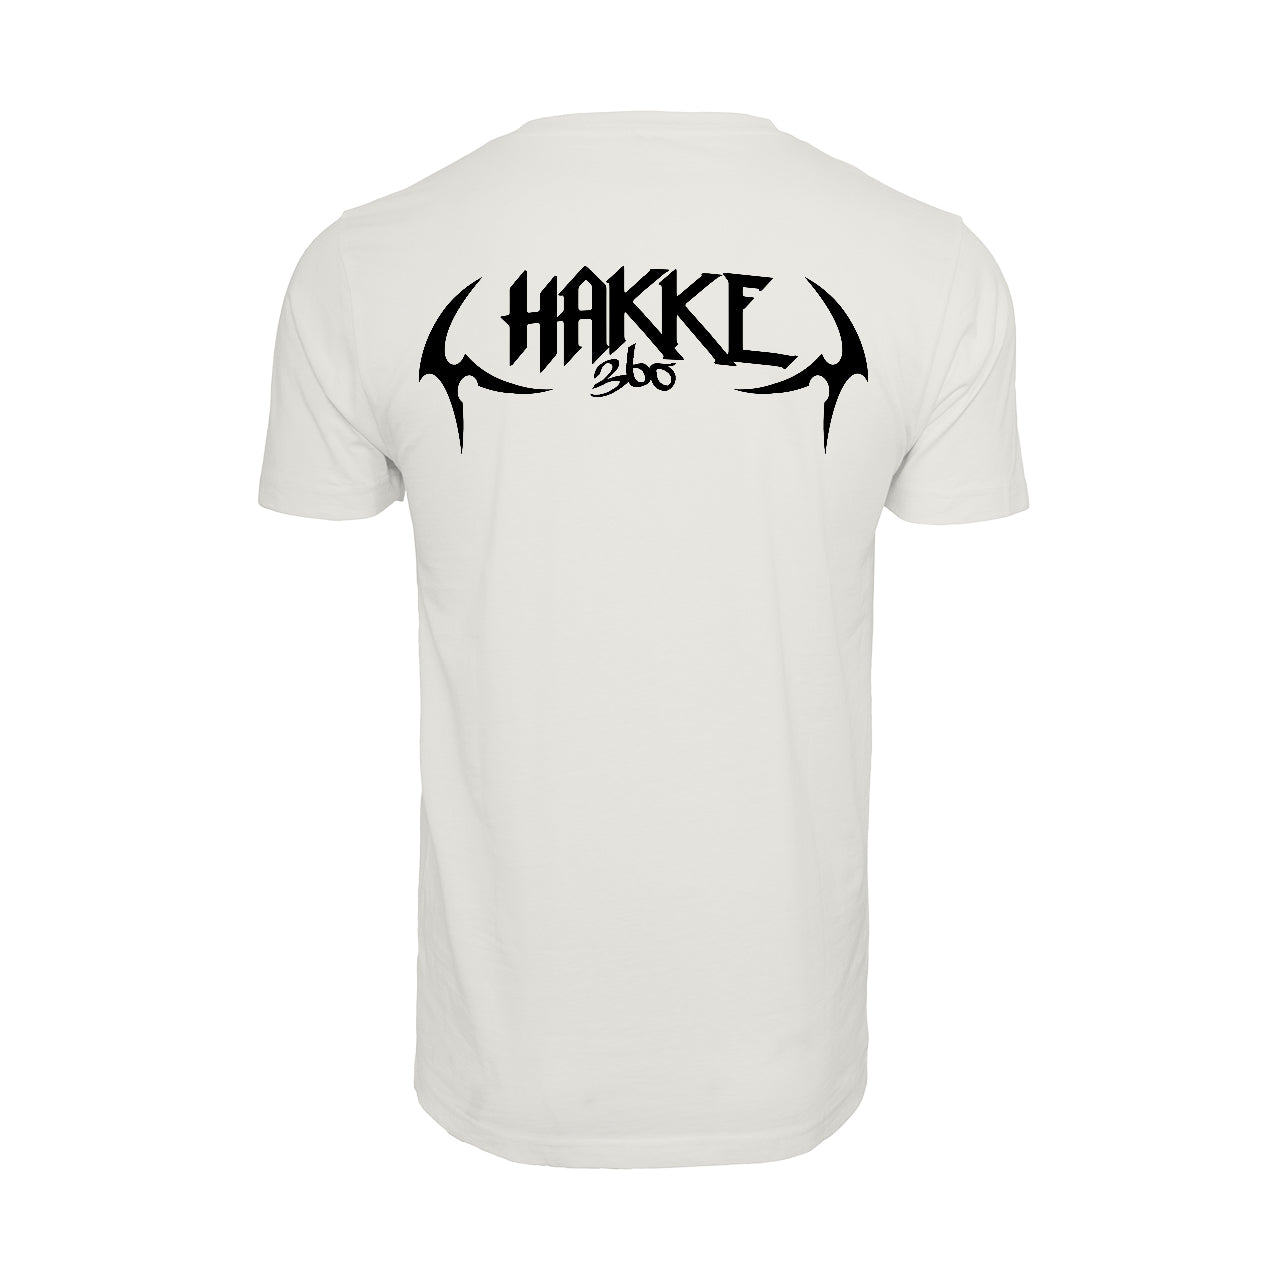 HAKKE360 - HAKKE360 Shirt